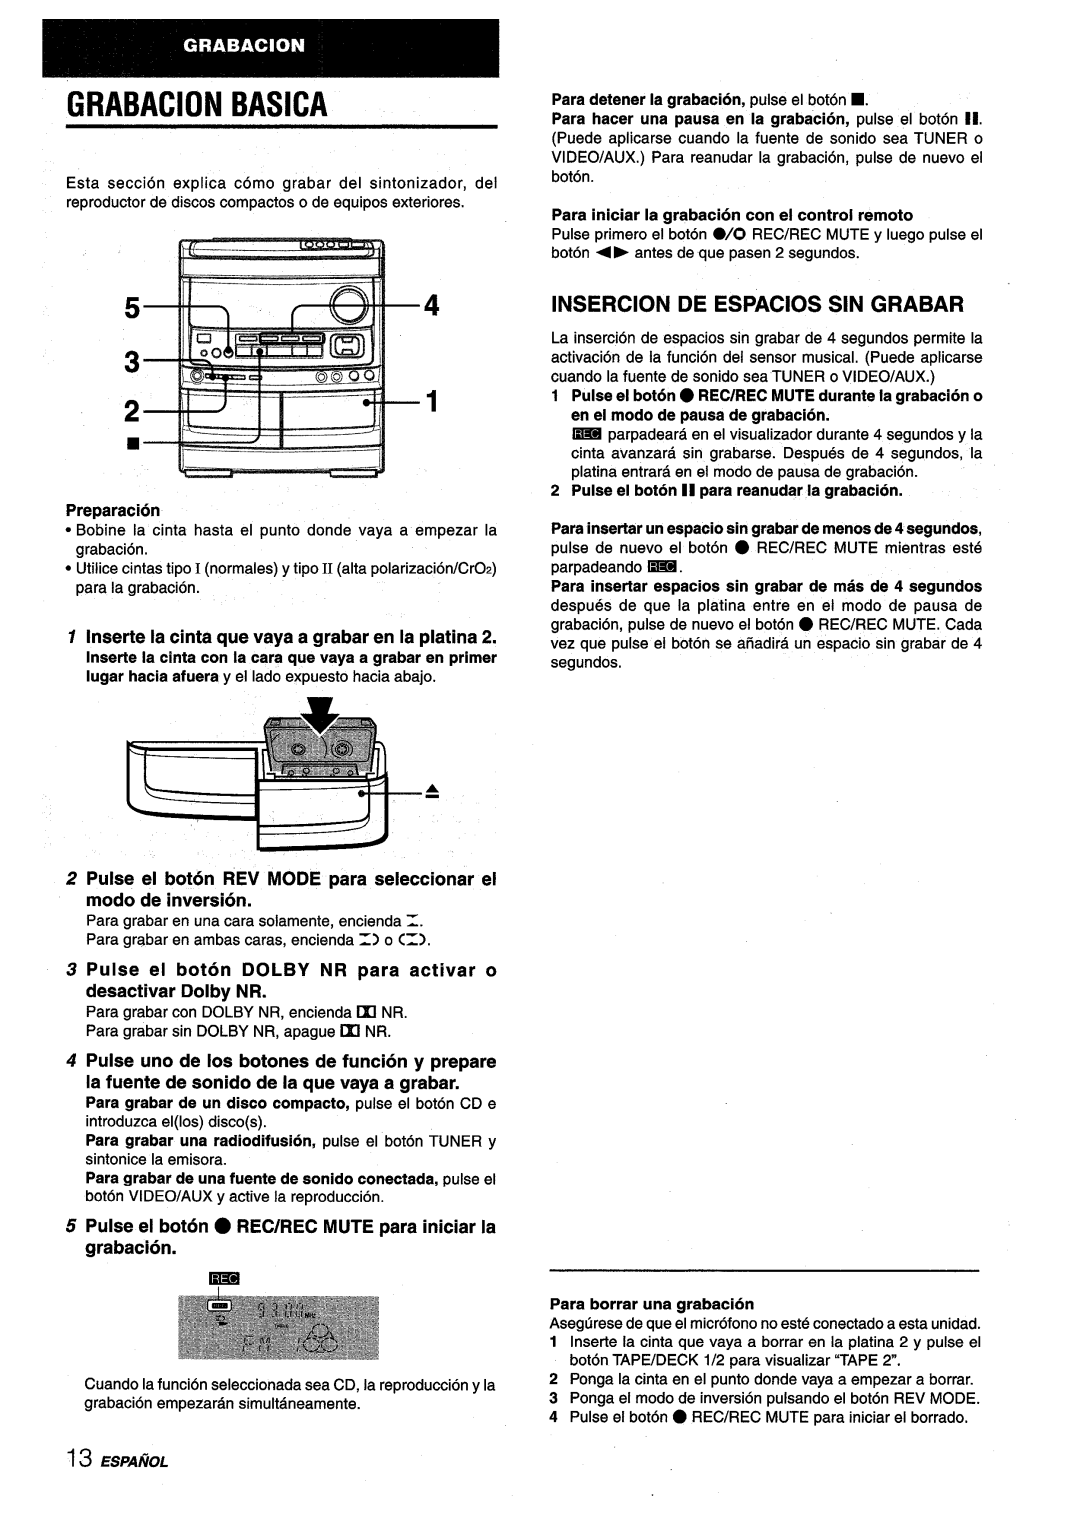 Aiwa NSX-V9000 manual Grabacion Basica, Insercion De Espacios Sin Grabar, Inserte la cinta que vaya a grabar en la platina 